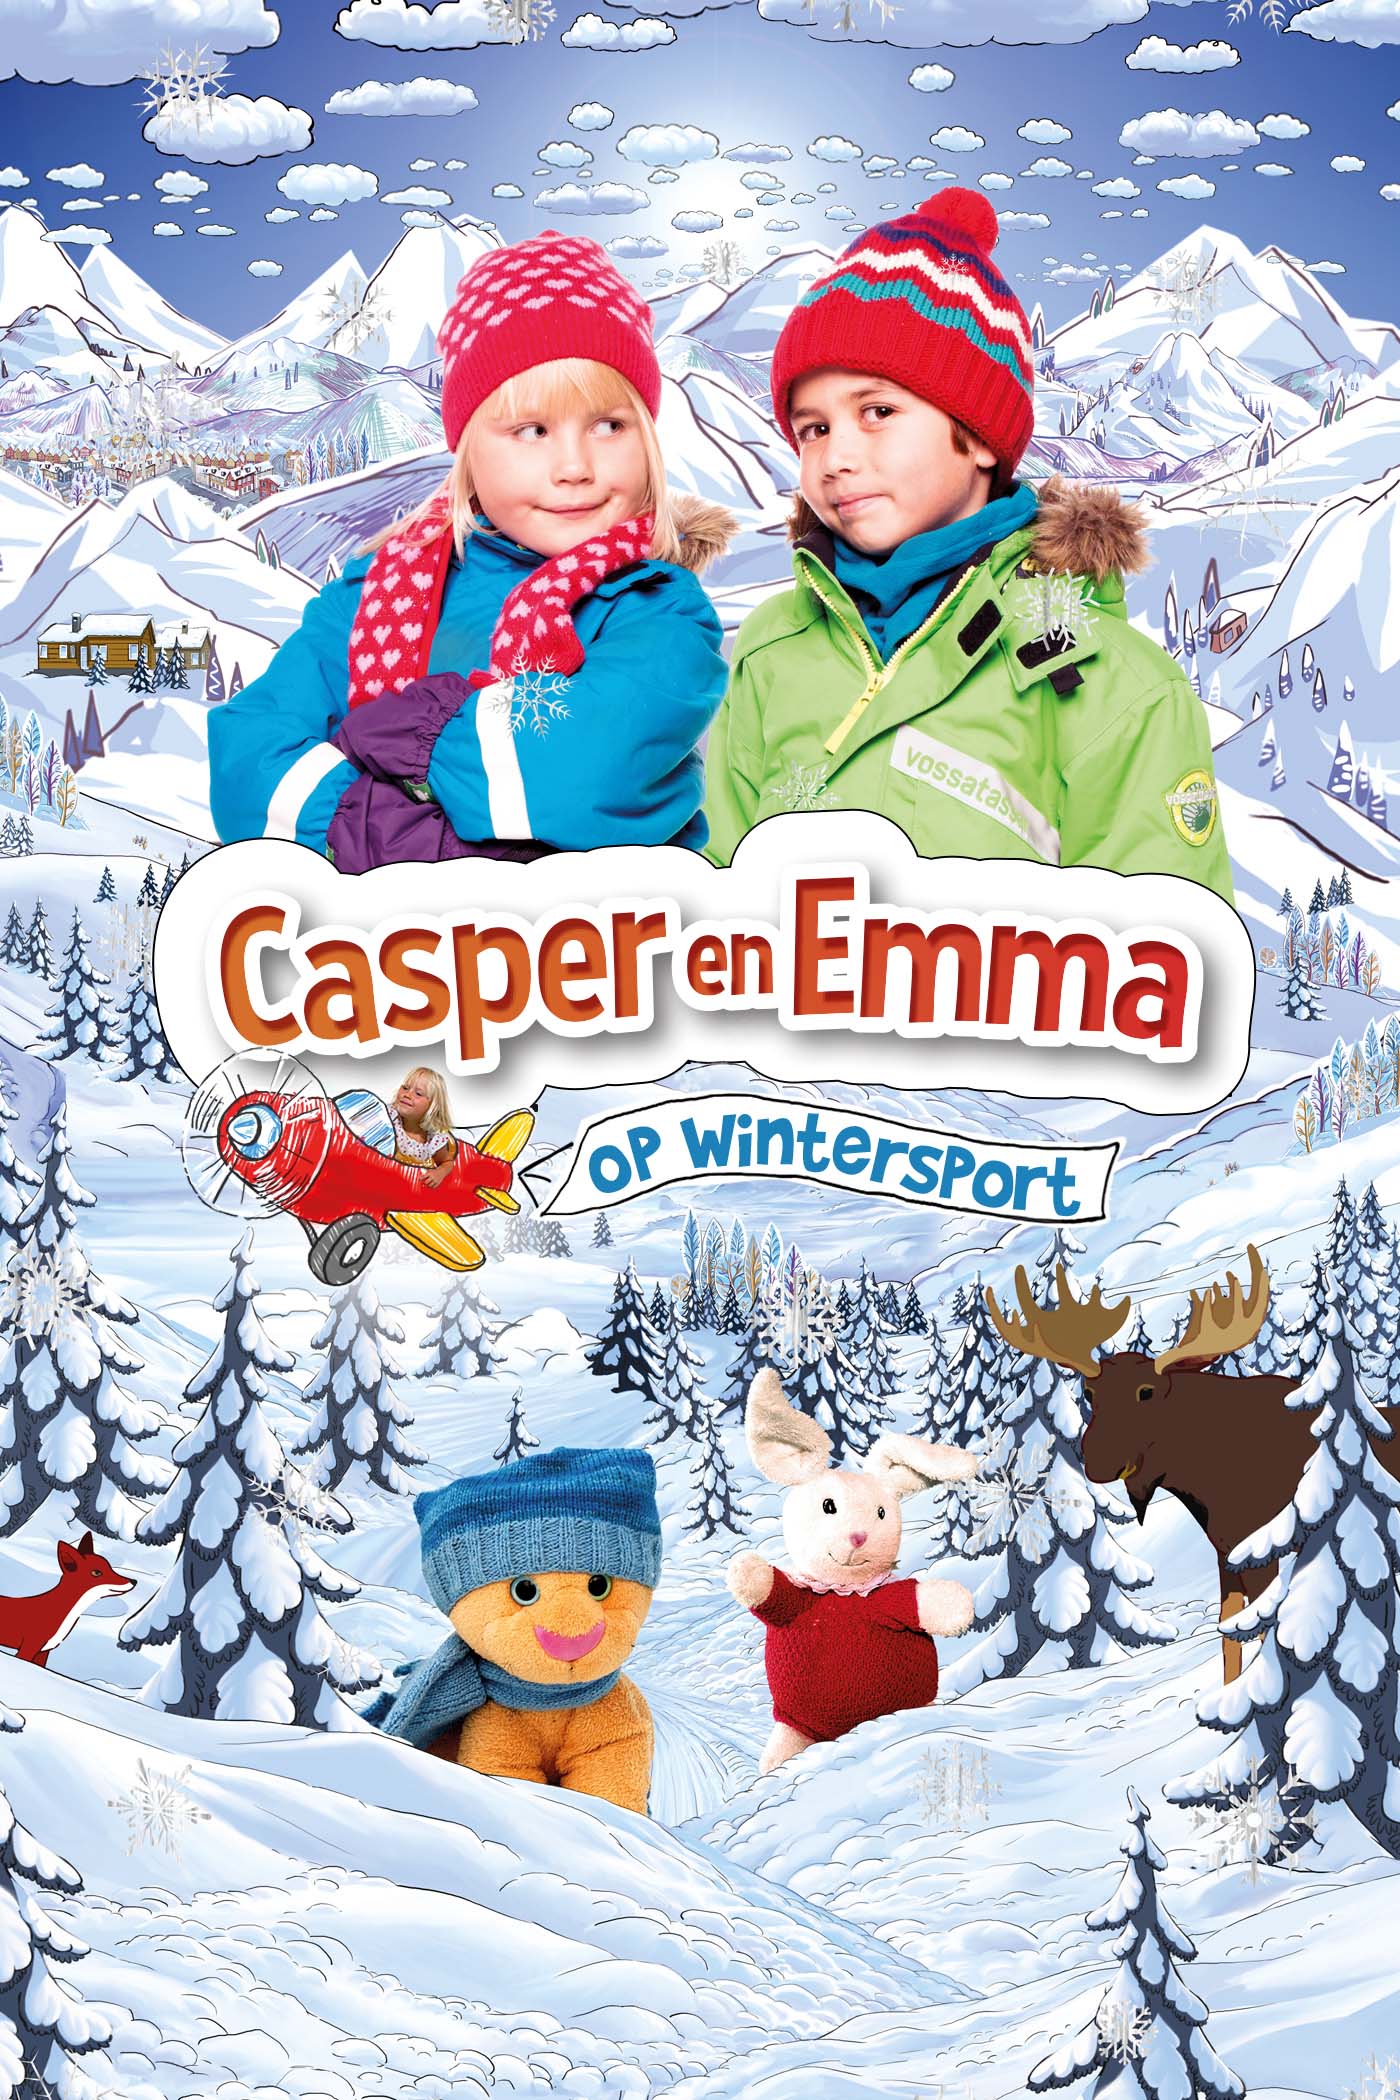 Casper and Emma on winter sports